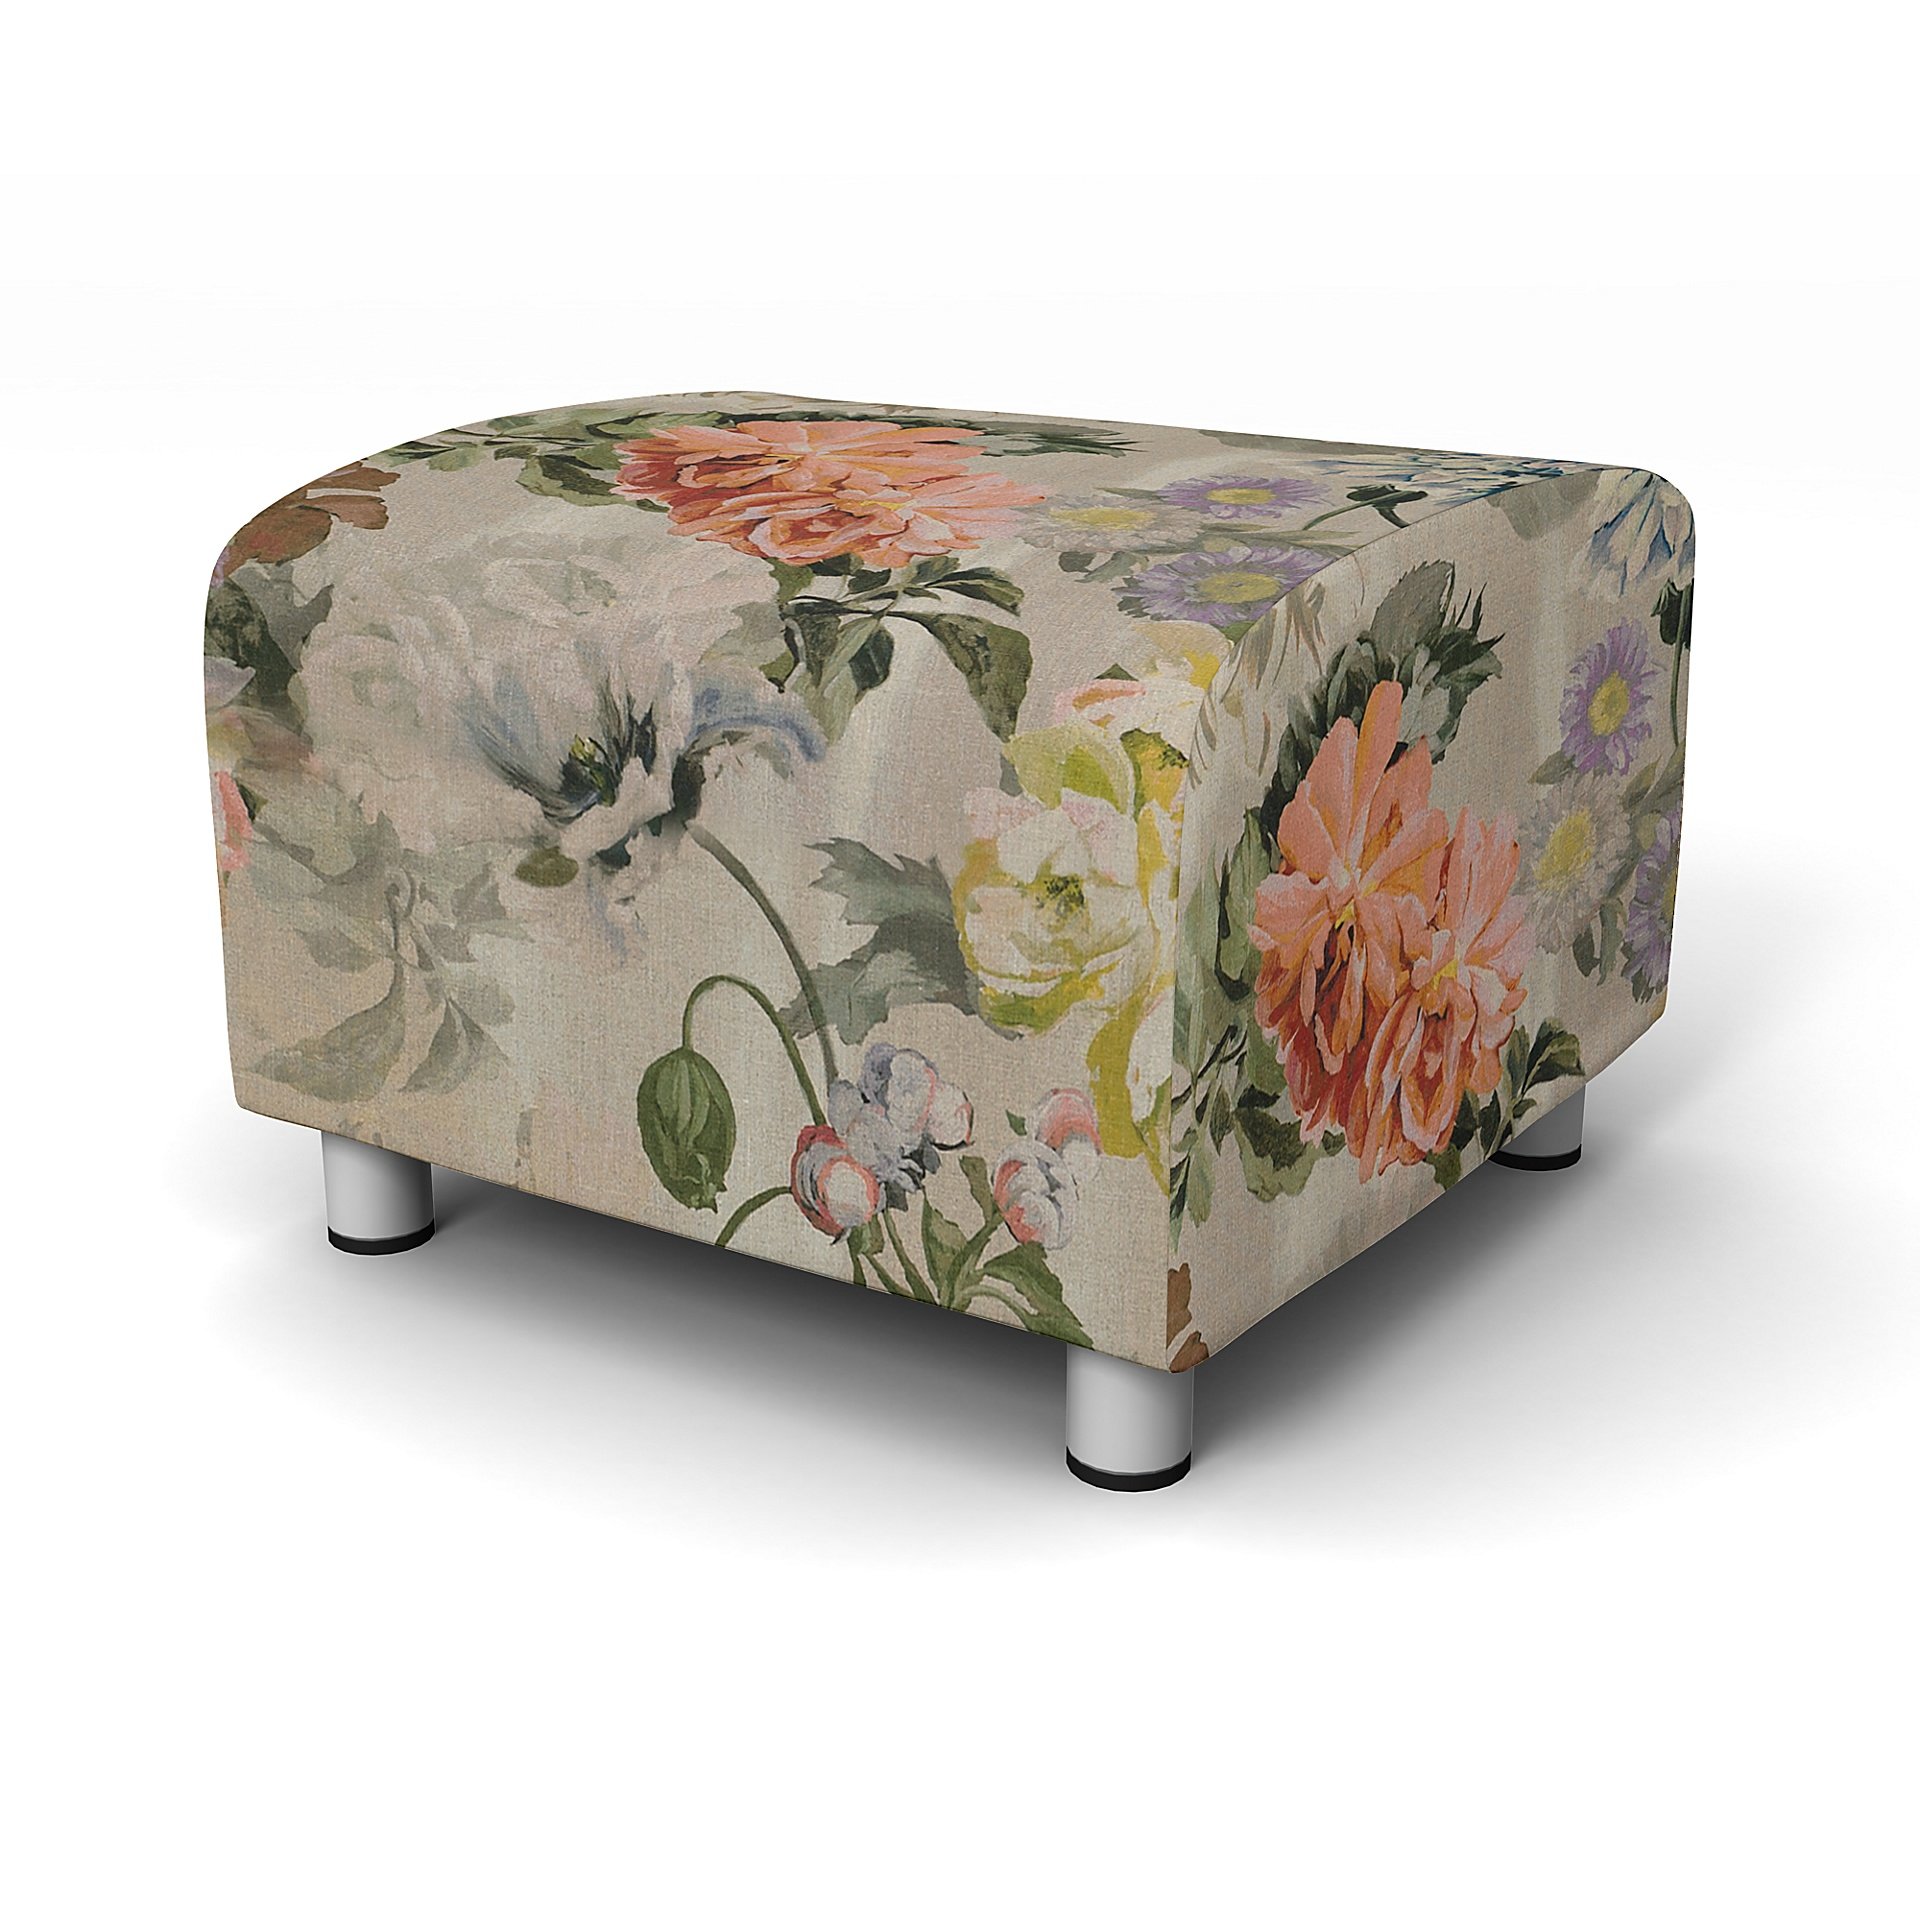 IKEA - Klippan Footstool Cover, Delft Flower - Tuberose, Linen - Bemz